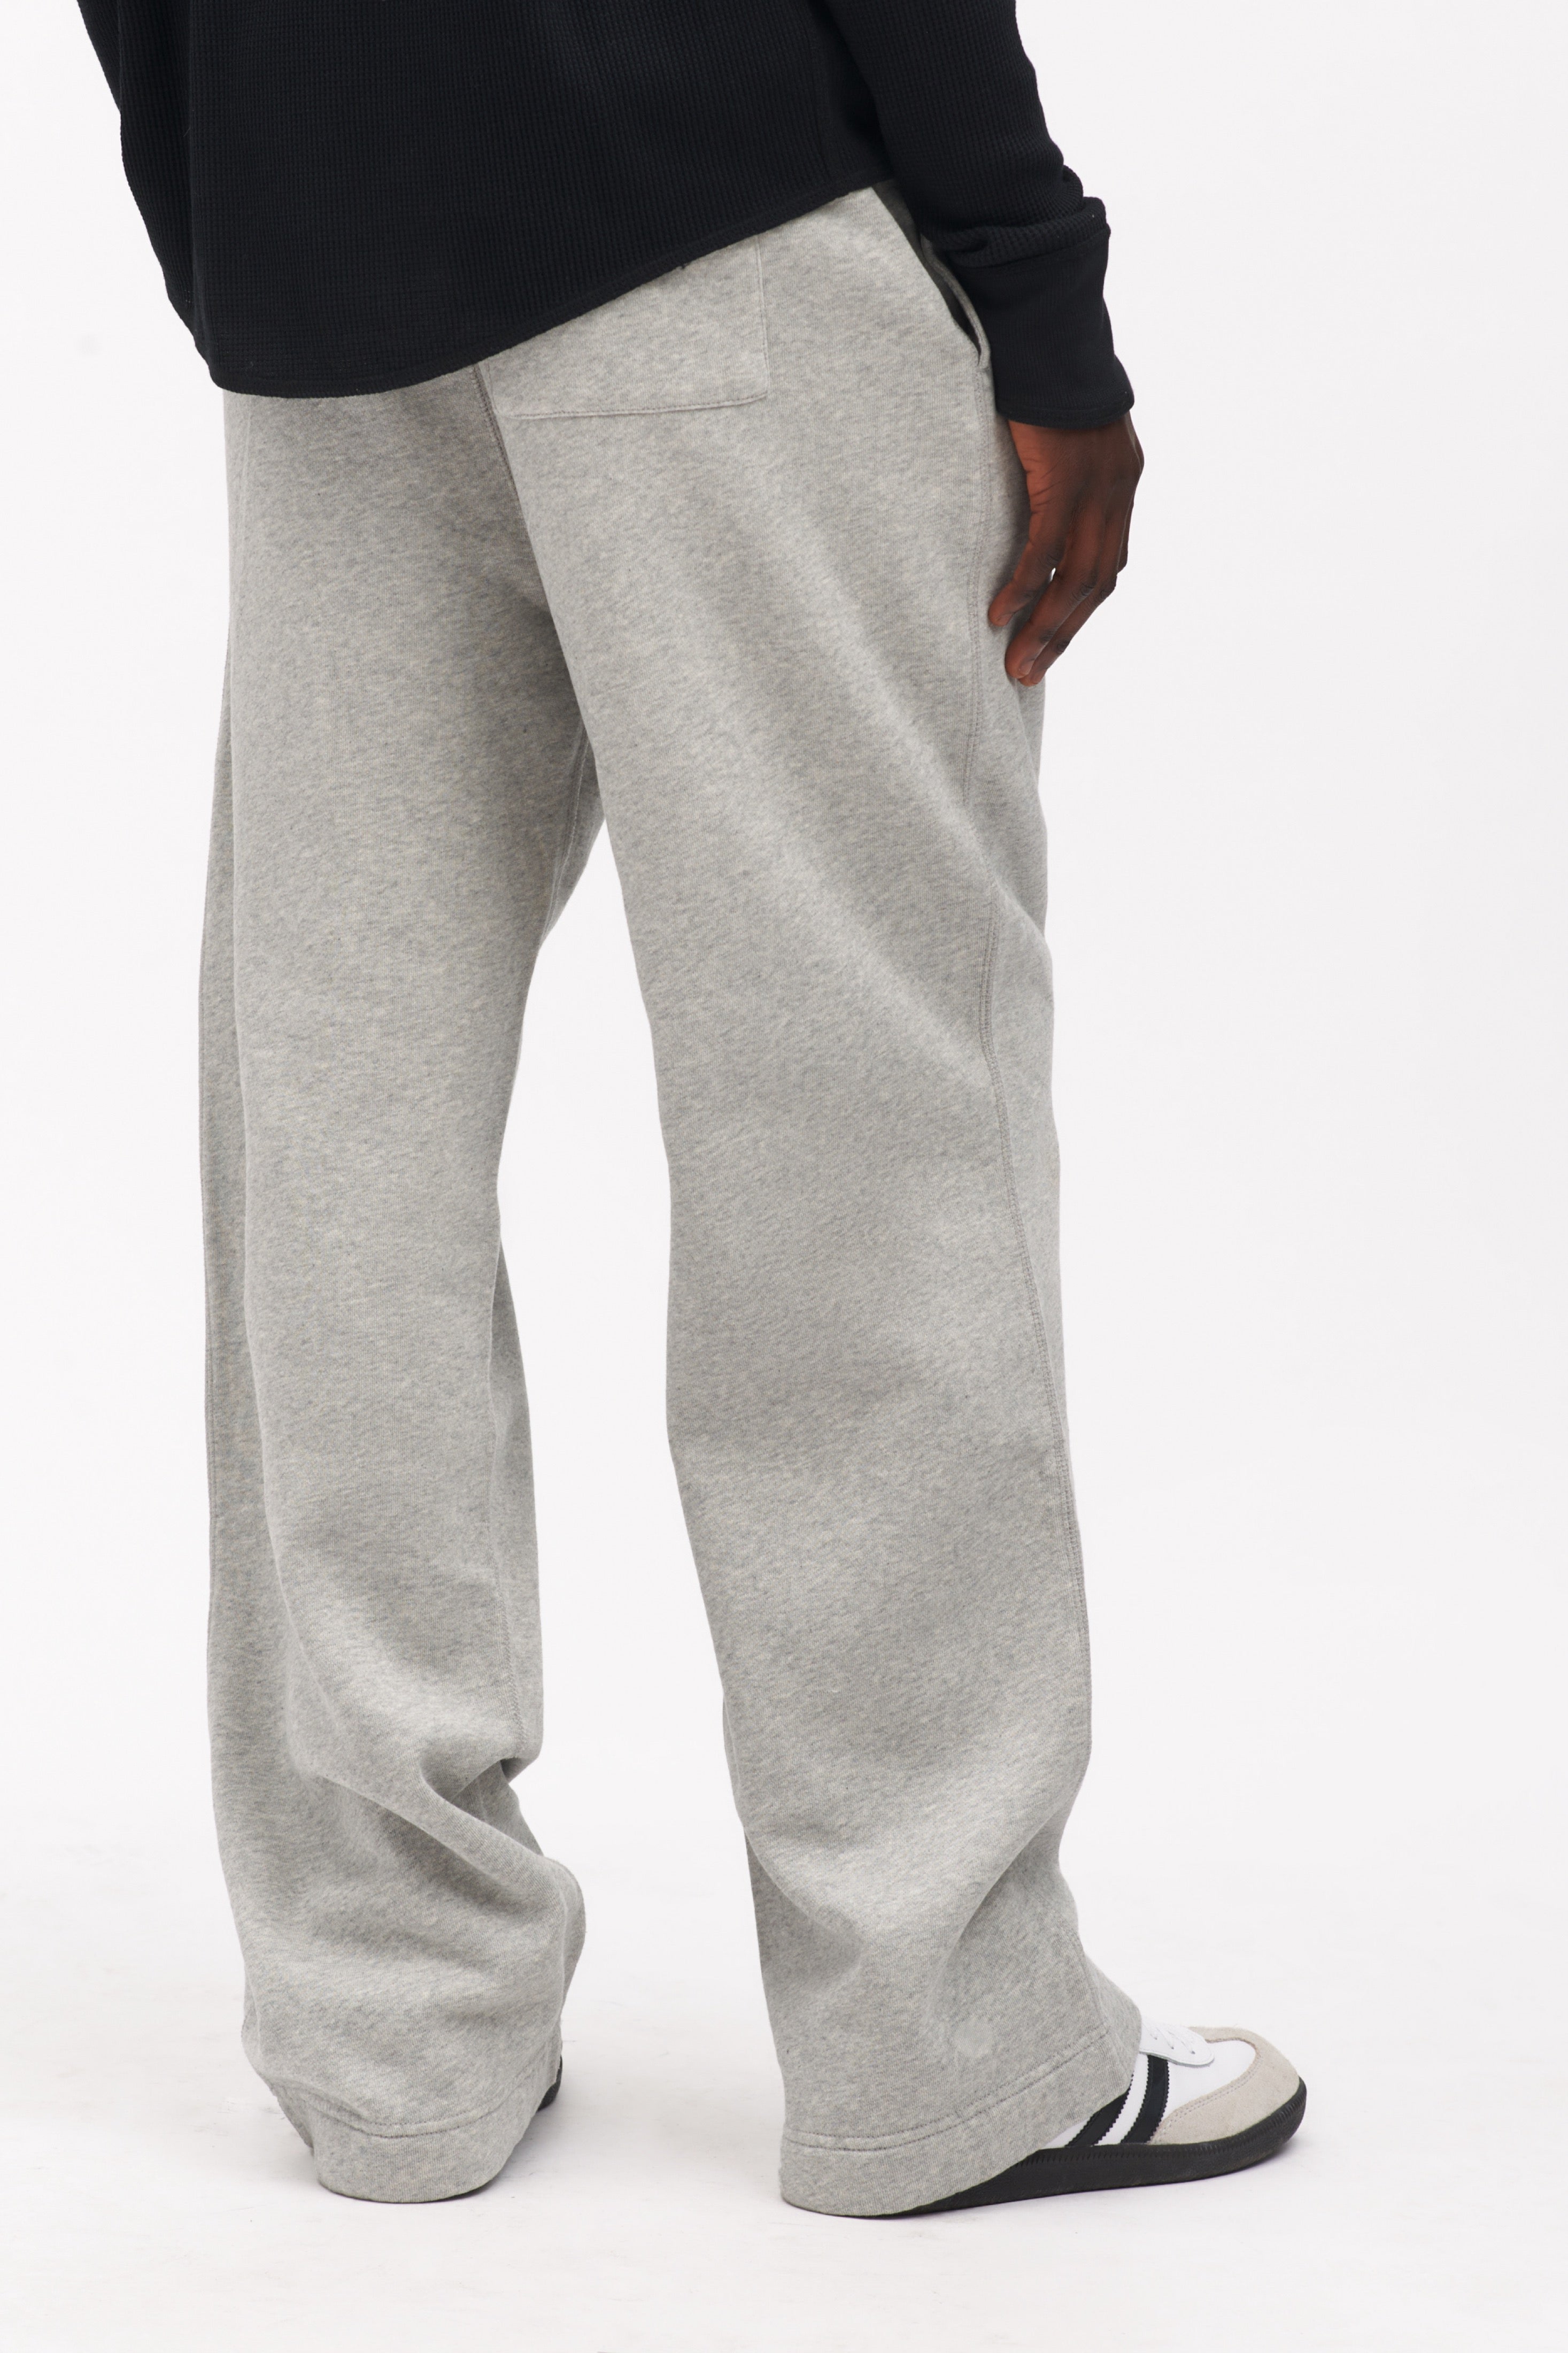 Topman straight leg sweatpants in gray heather